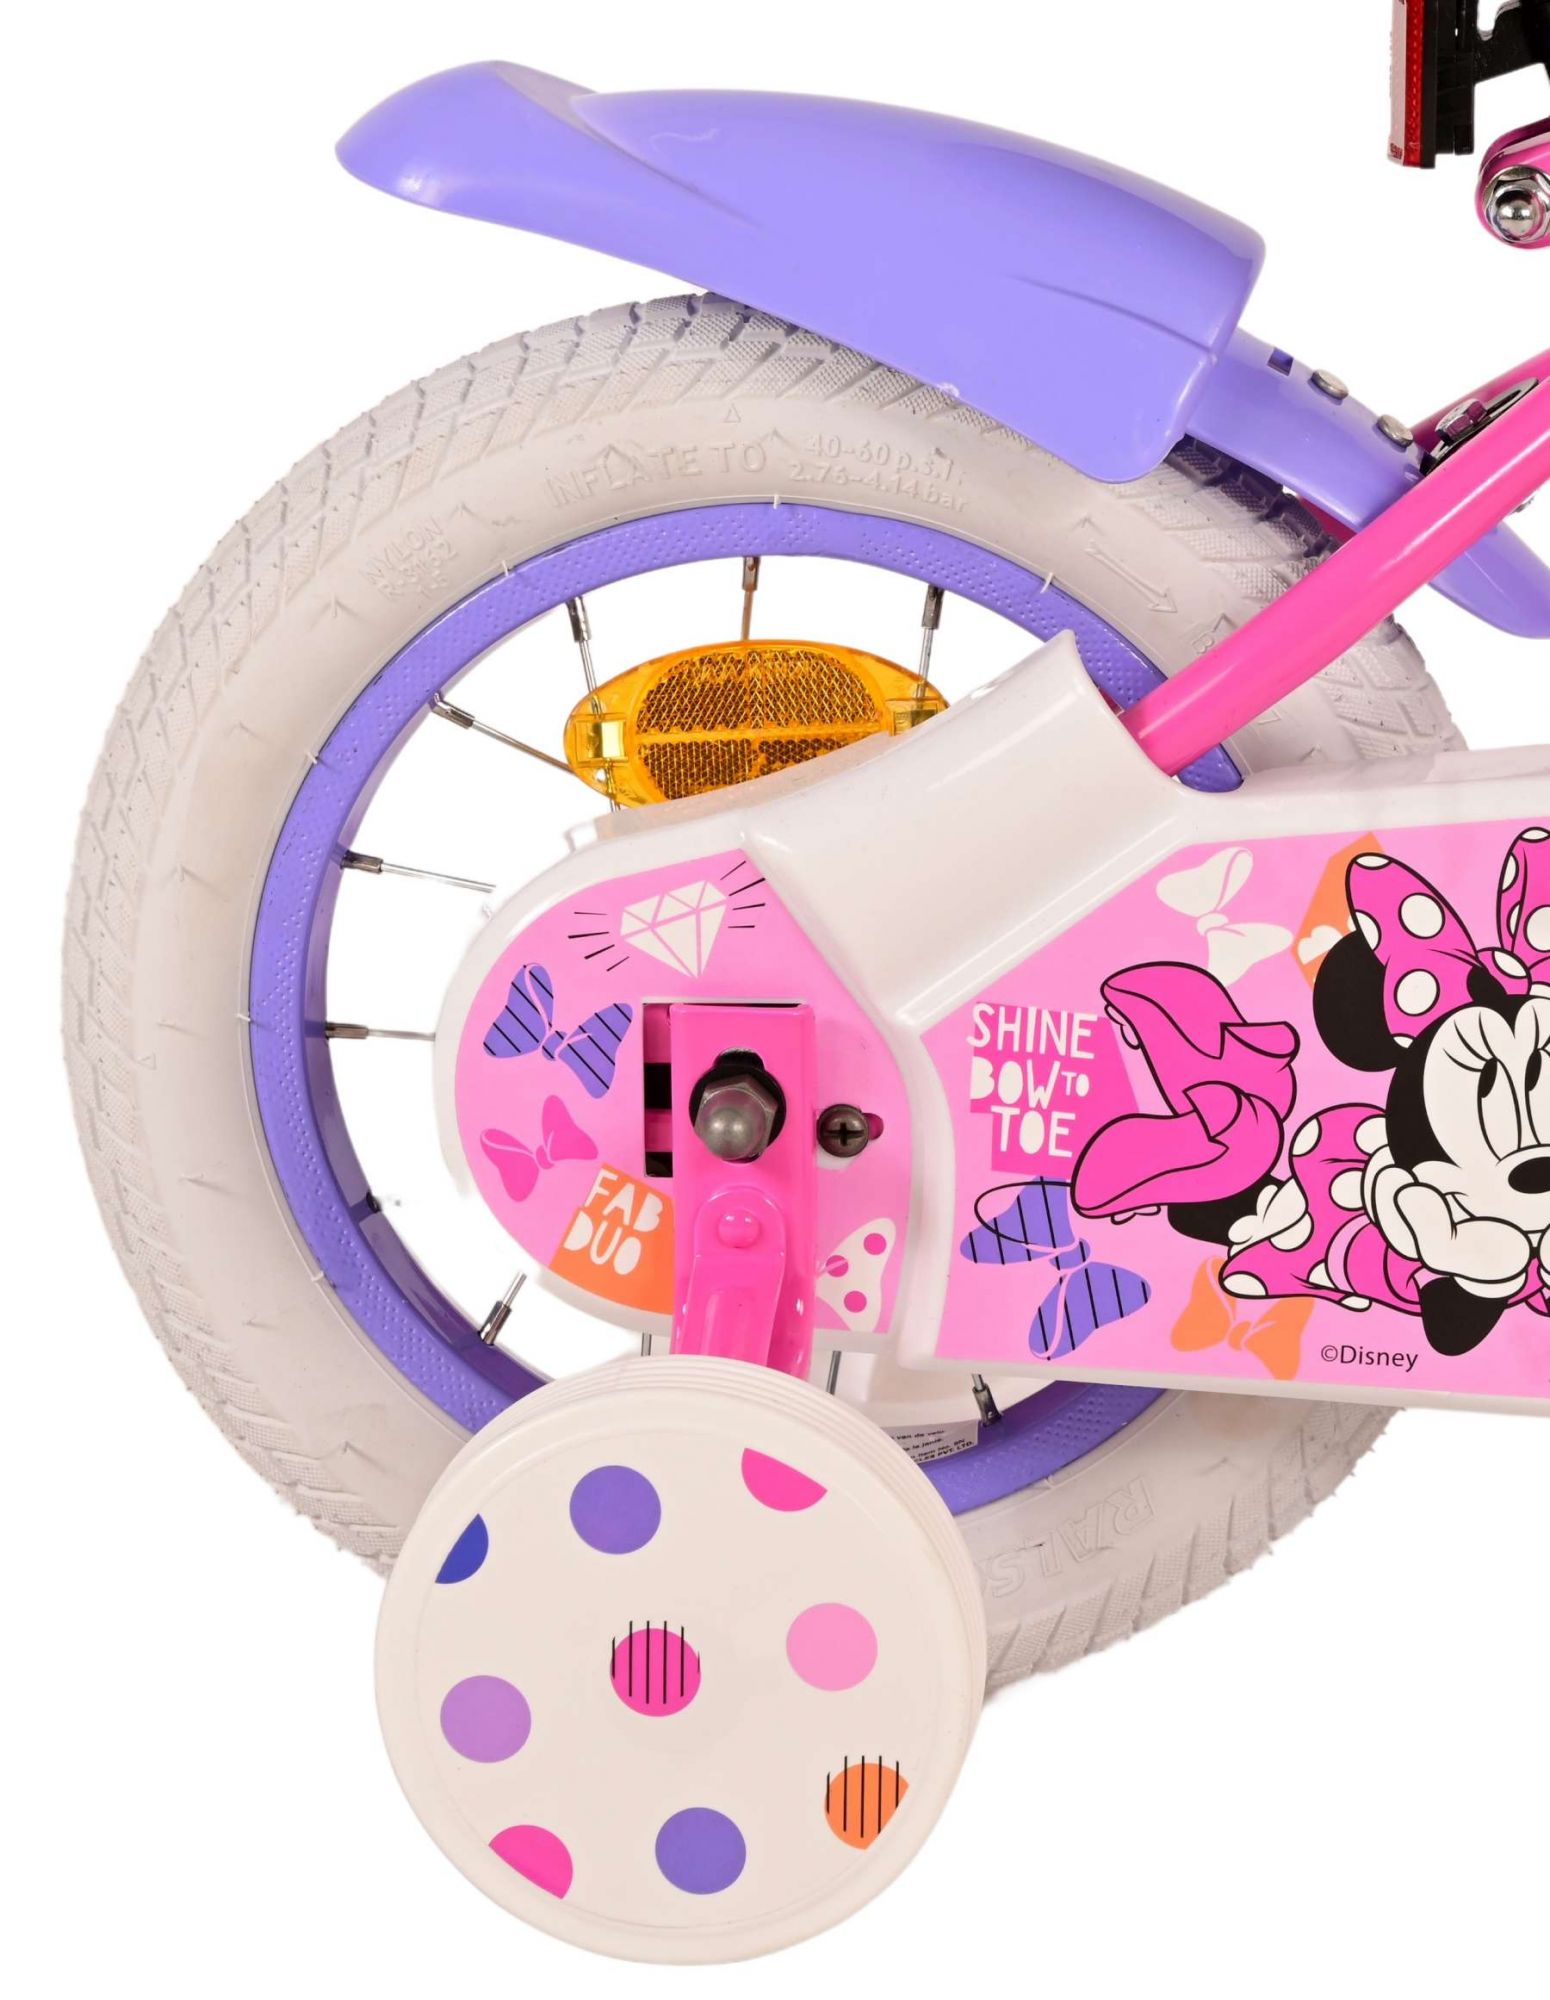 Minnie Cutest Ever! Kinderfiets – Meisjes – 12 inch – Roze